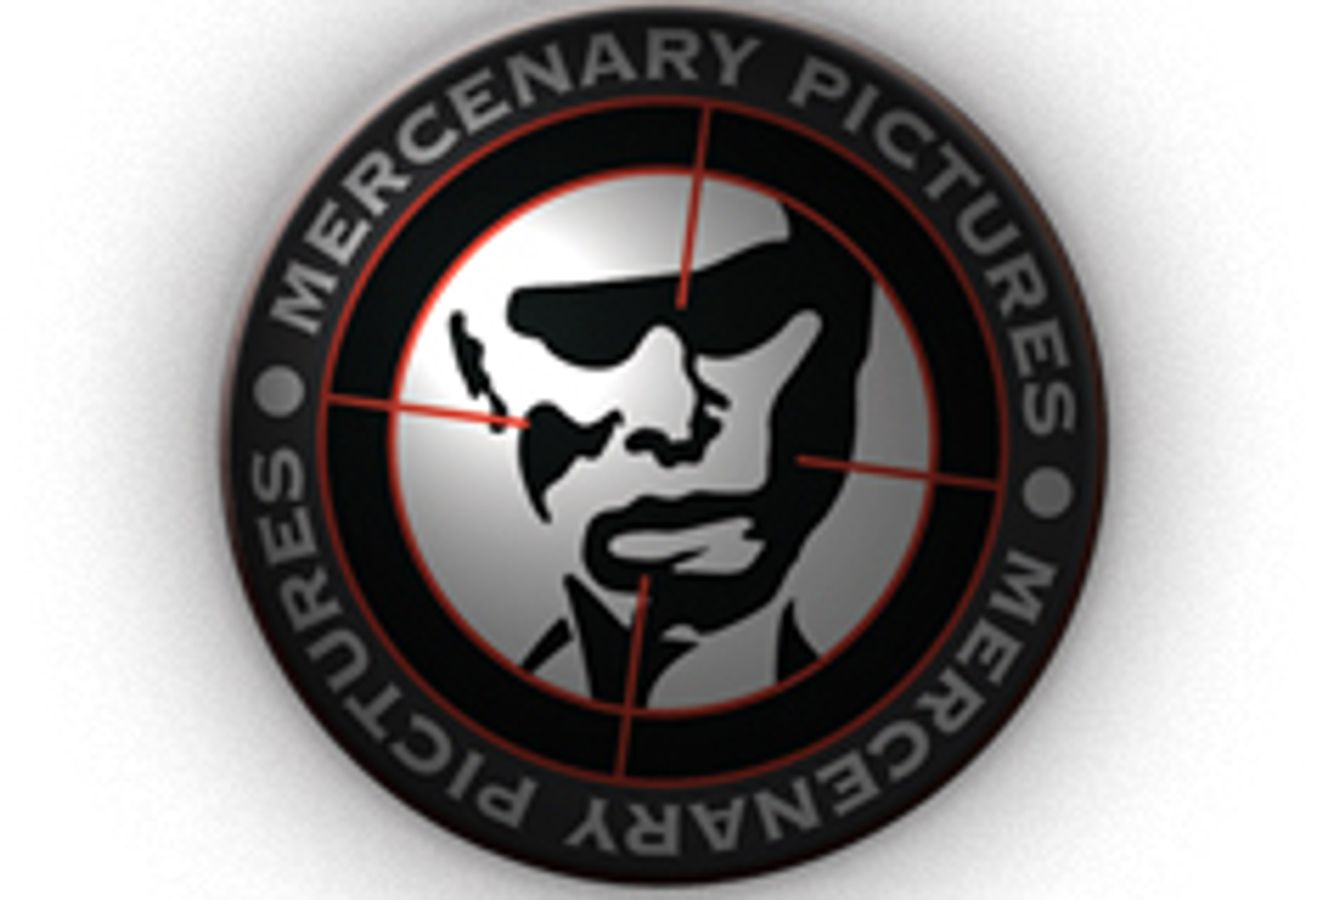 Mercenary Pictures